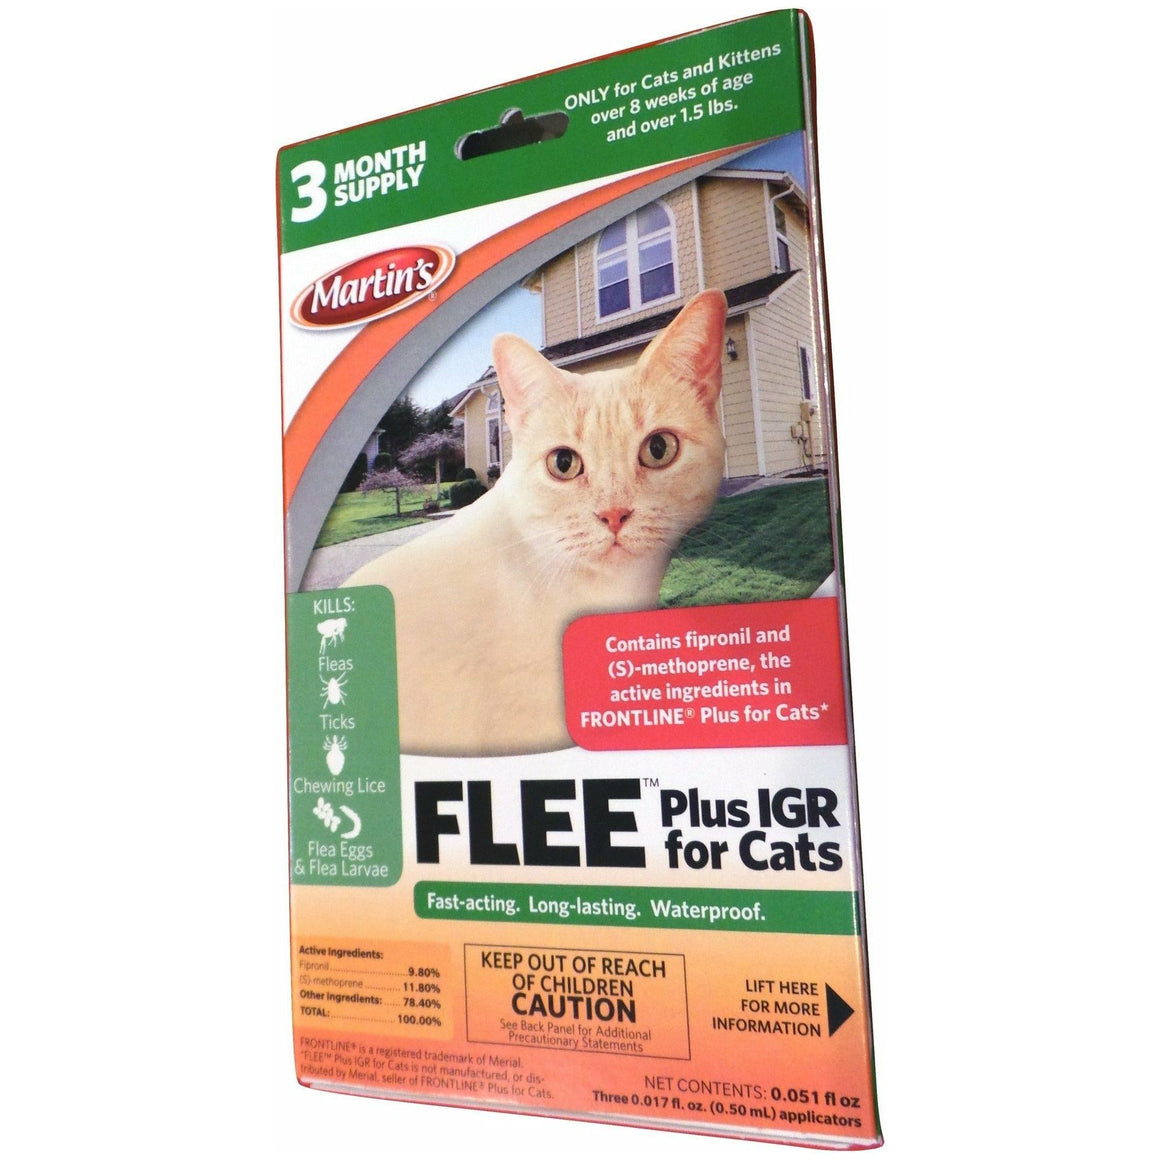 Flee Plus IGR for Cats - Seed World